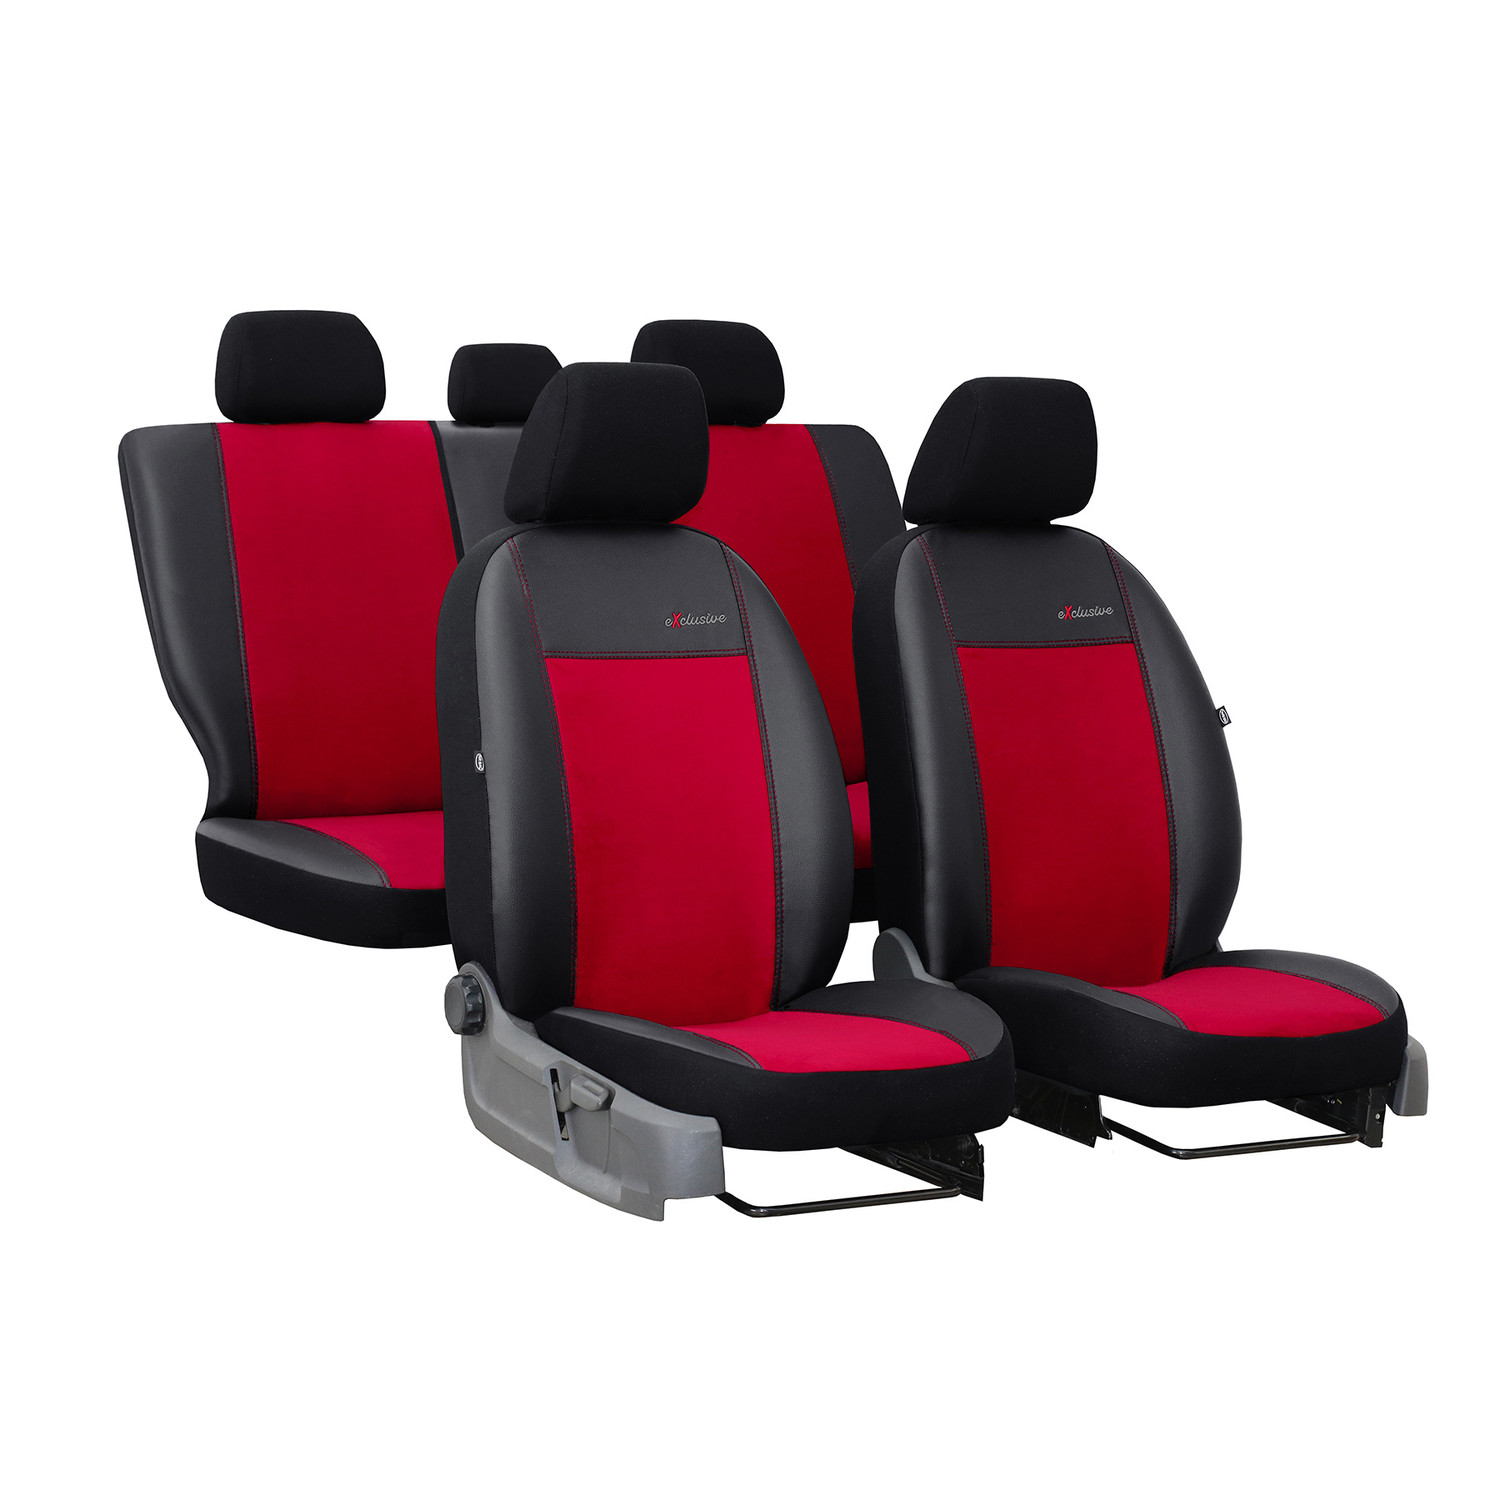 Universal Autositzbezug Kit 9 STÜCKE Volle Sitzbezüge für Auto